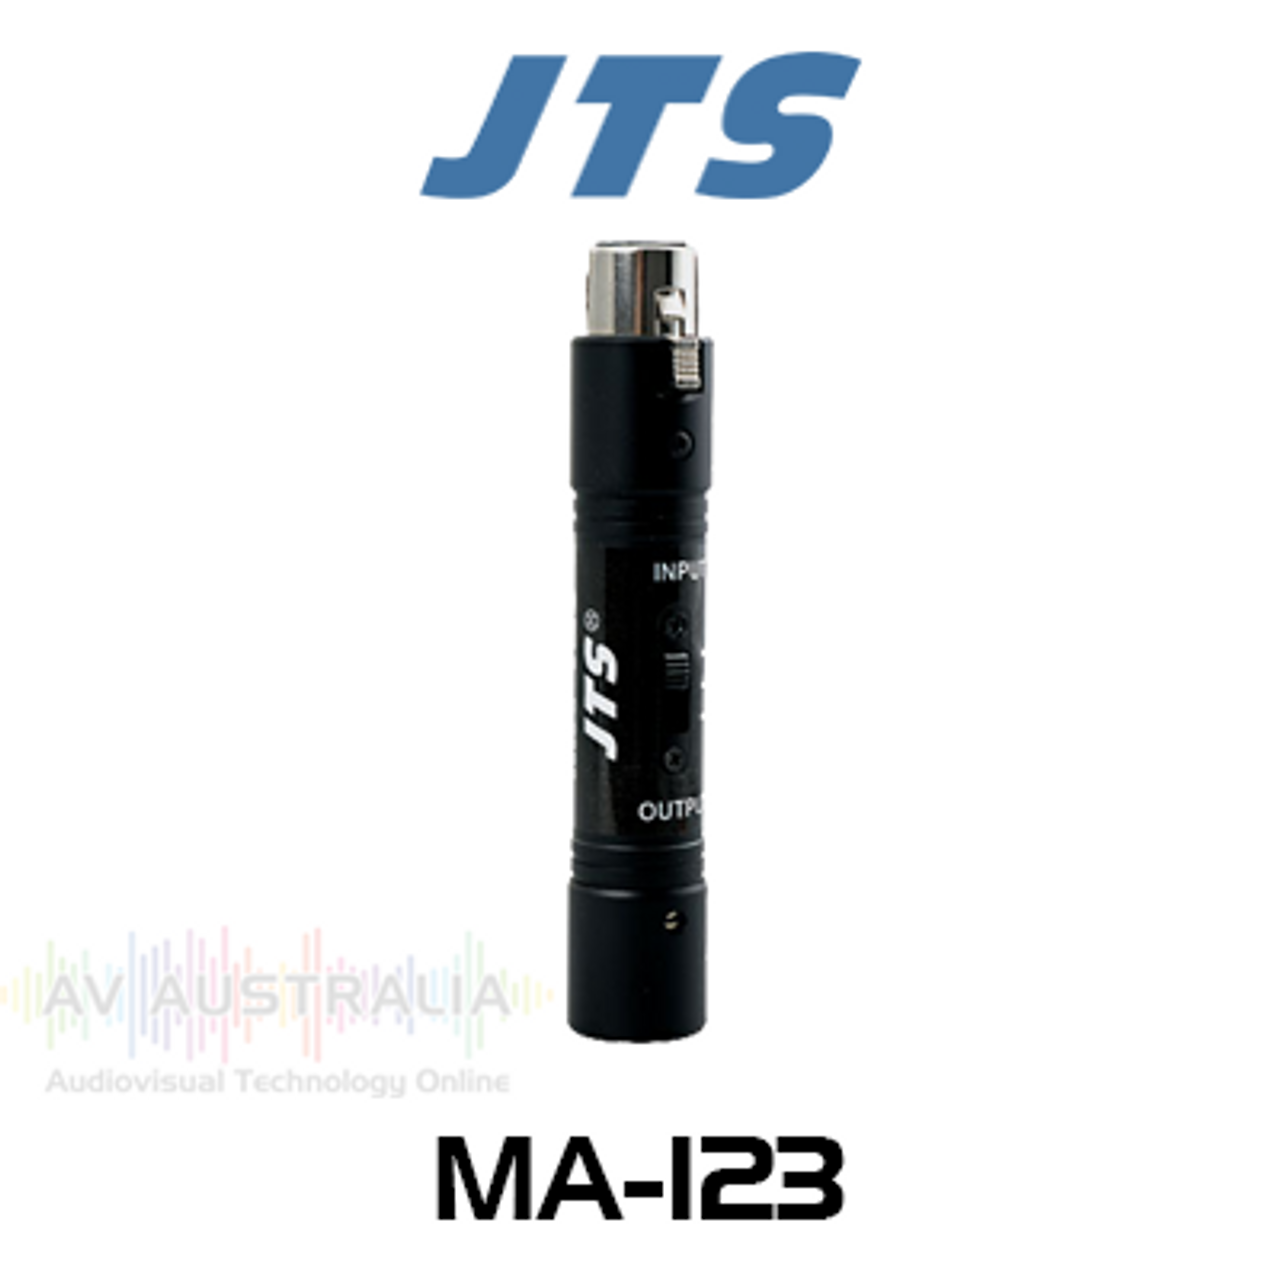 JTS MA-123 Adjustable In-Line Attenuator